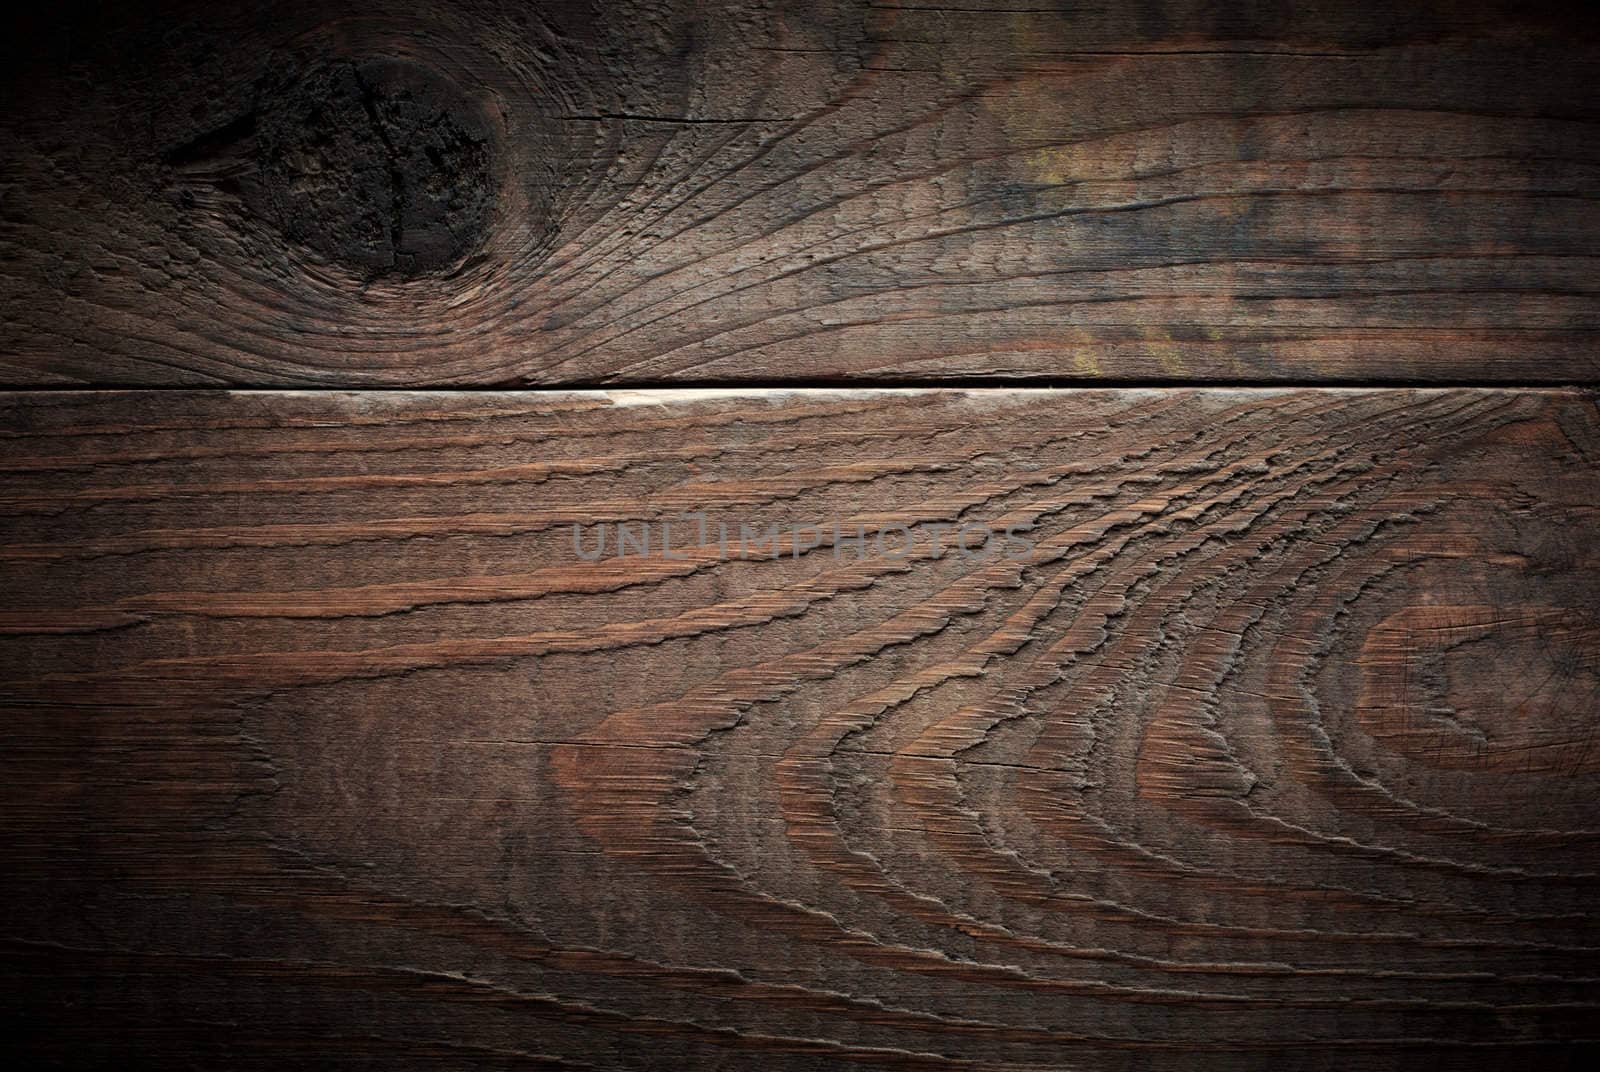 Old planks. Wood background.